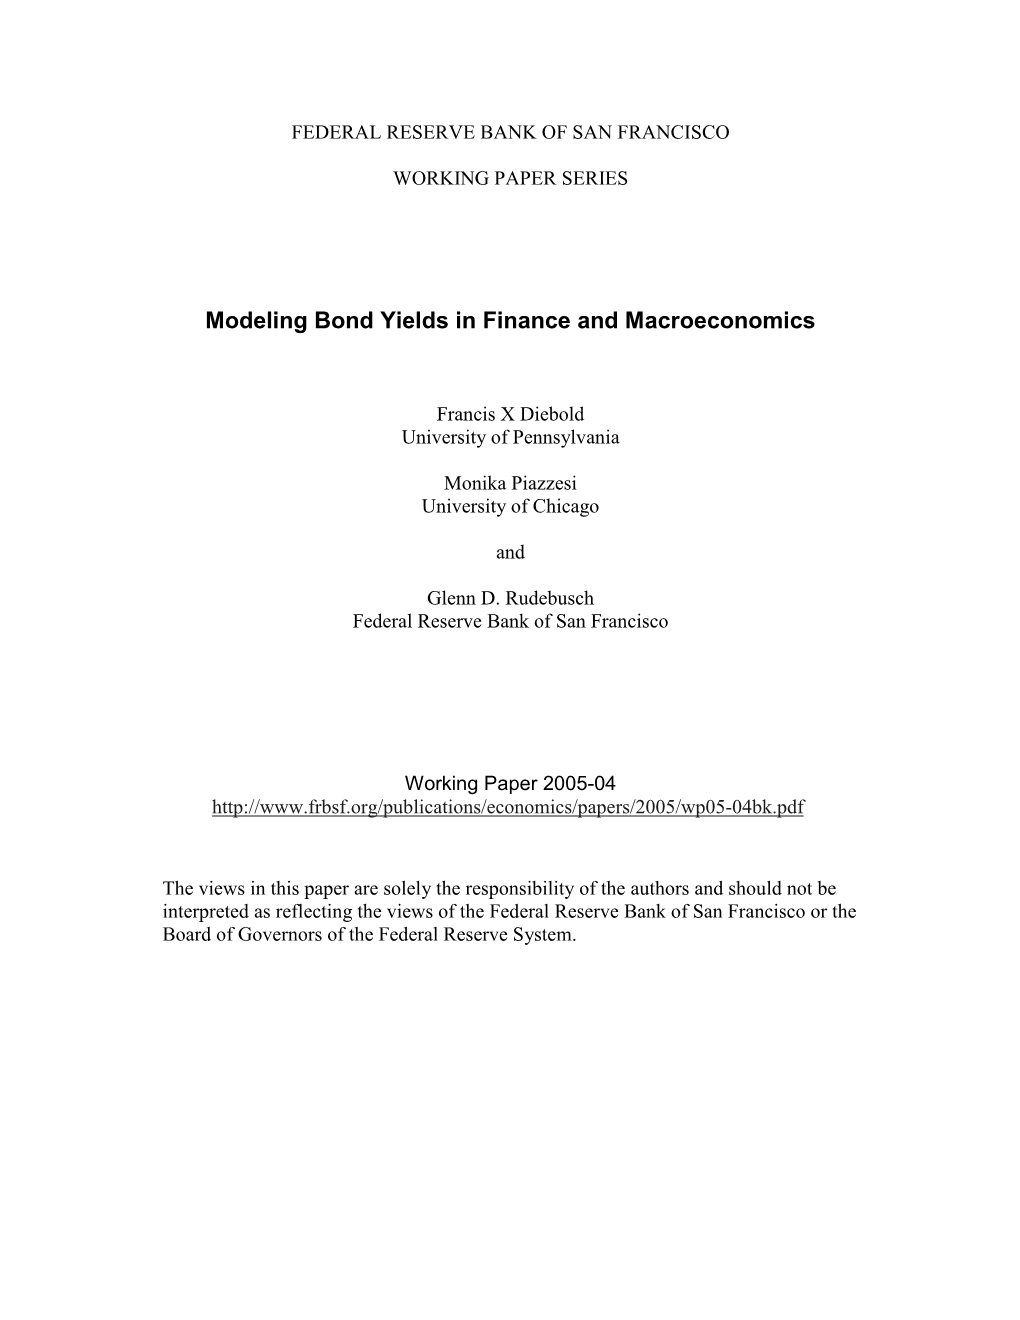 Modeling Bond Yields in Finance and Macroeconomics